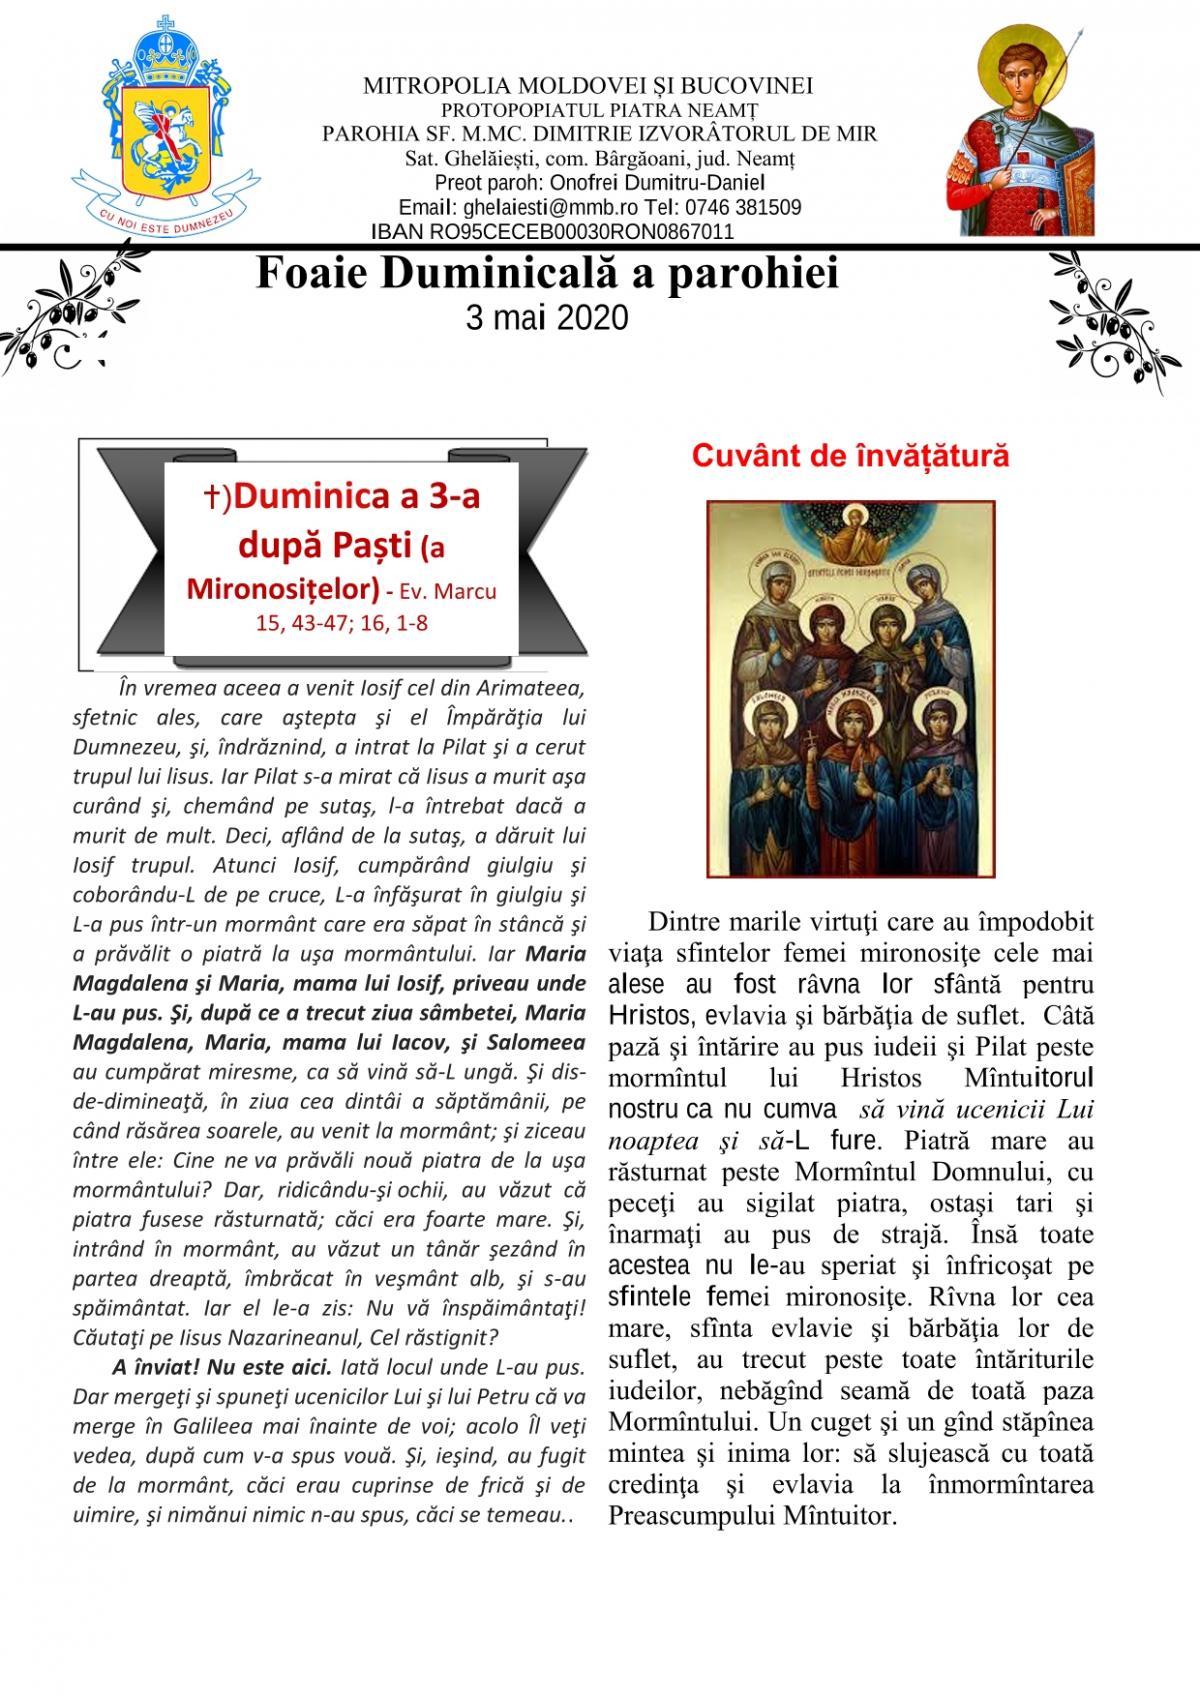 FOAIA DE DUMINICA A  PAROHIEI - DUMINICA MIRONOSITELOR PAG.1